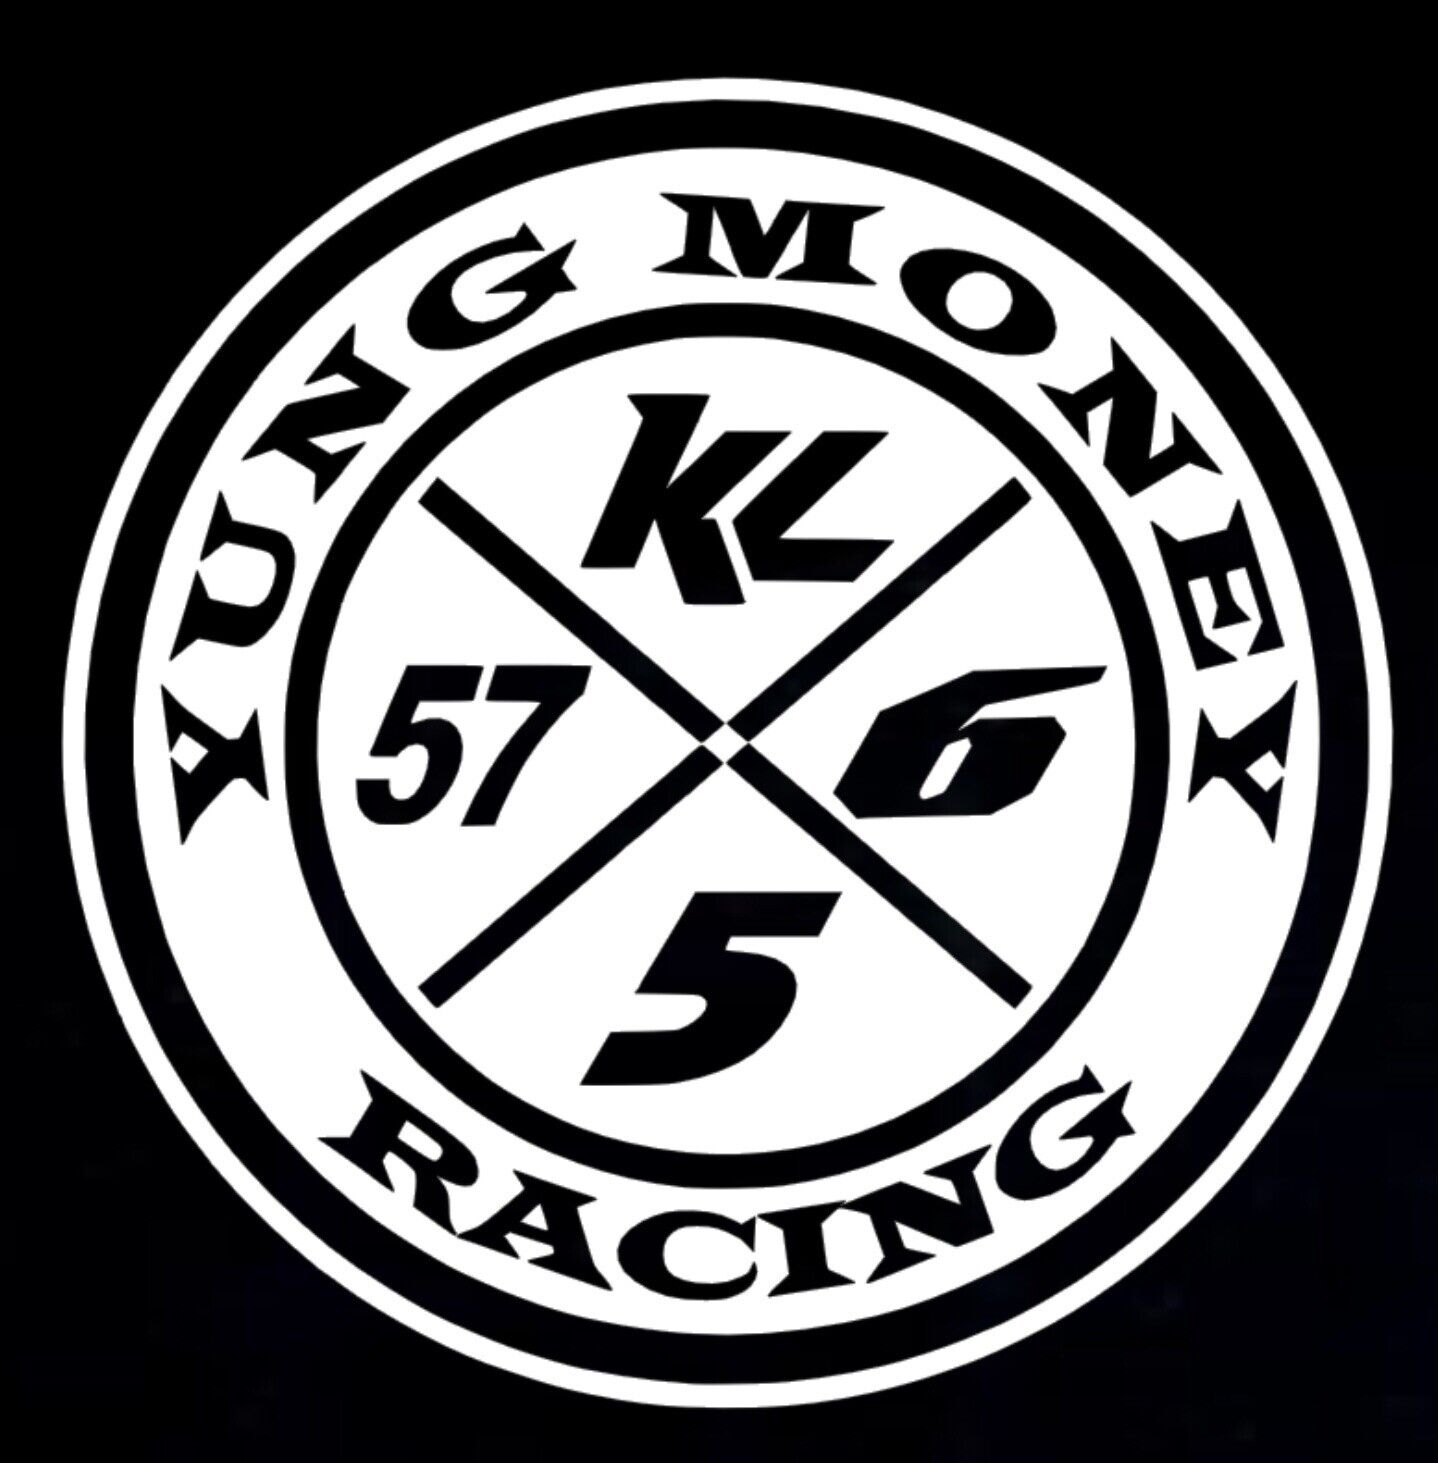 1 Kyle Larson Decal 5 6 57 Yung Money NASCAR Late model Sprint Car U Pick Color